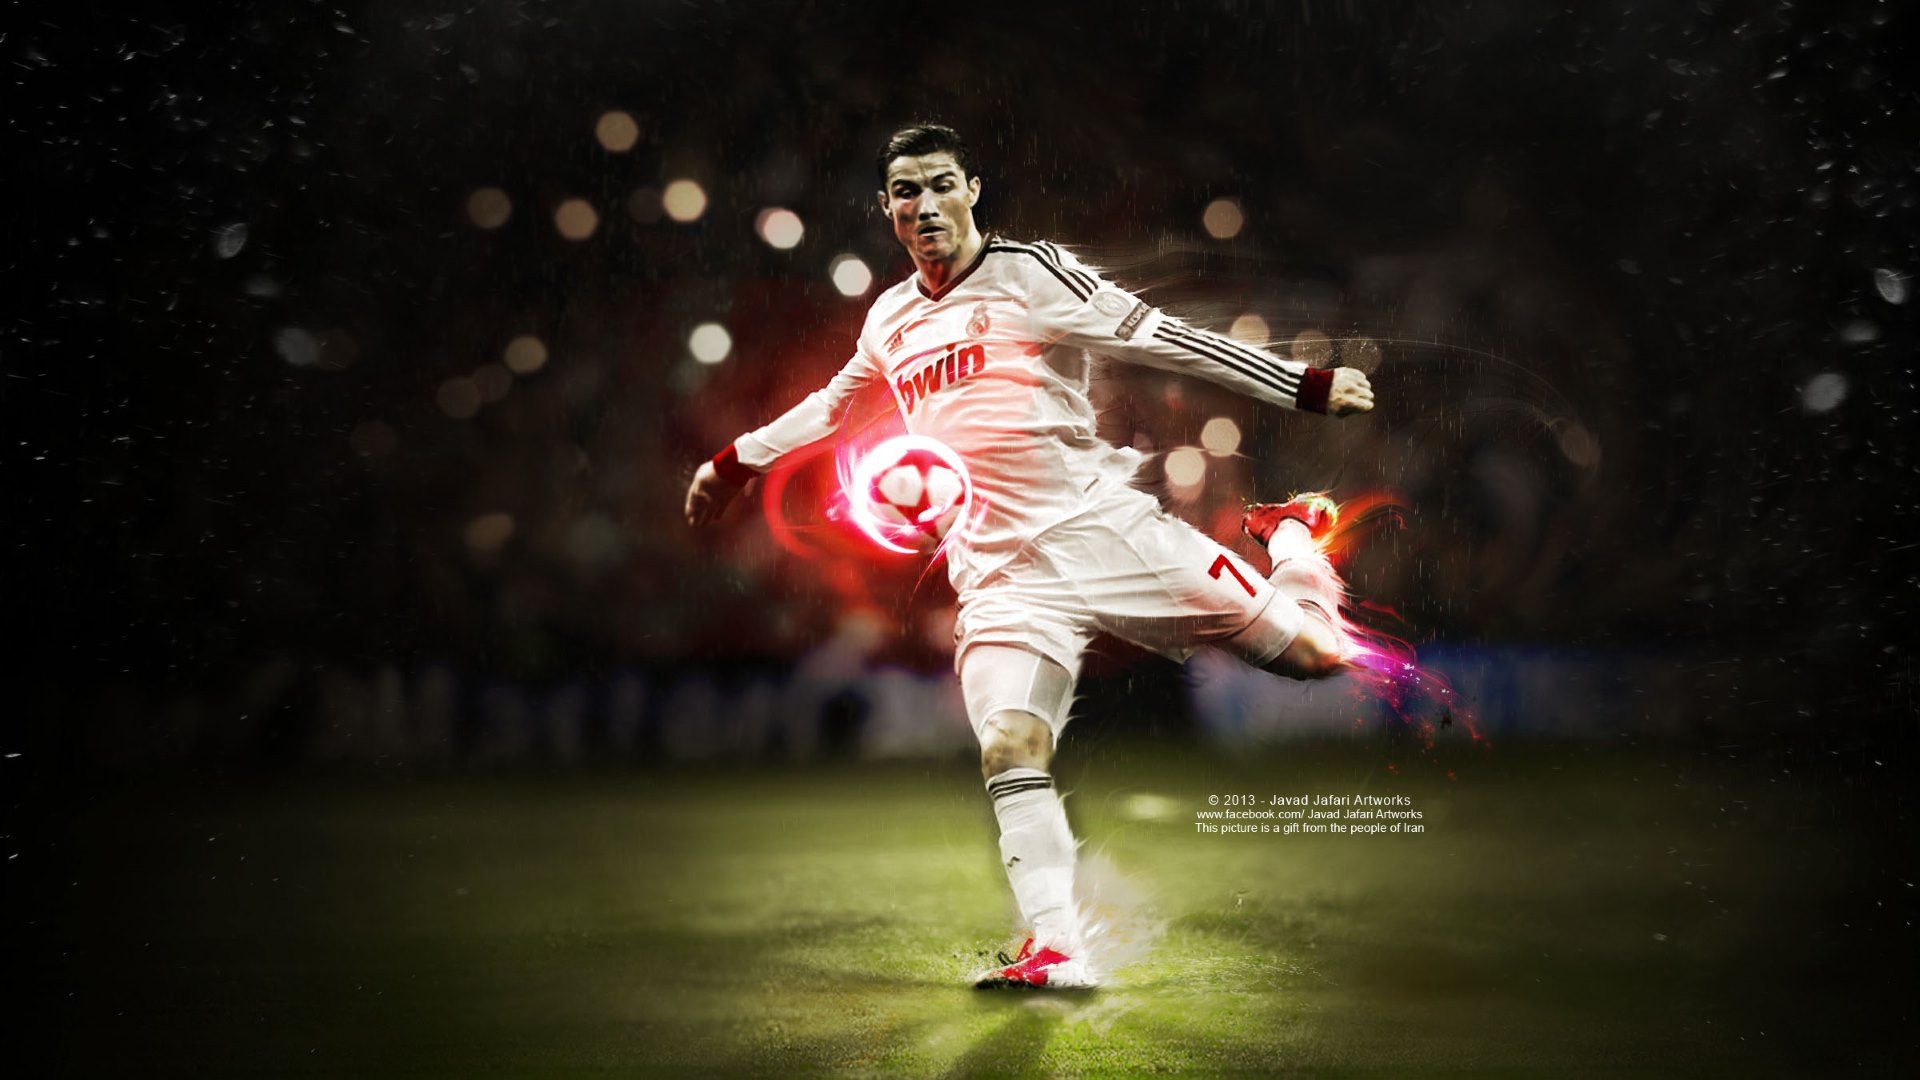 Cristiano Ronaldo Wallpaper for Desktop. V45. Cristiano Ronaldo